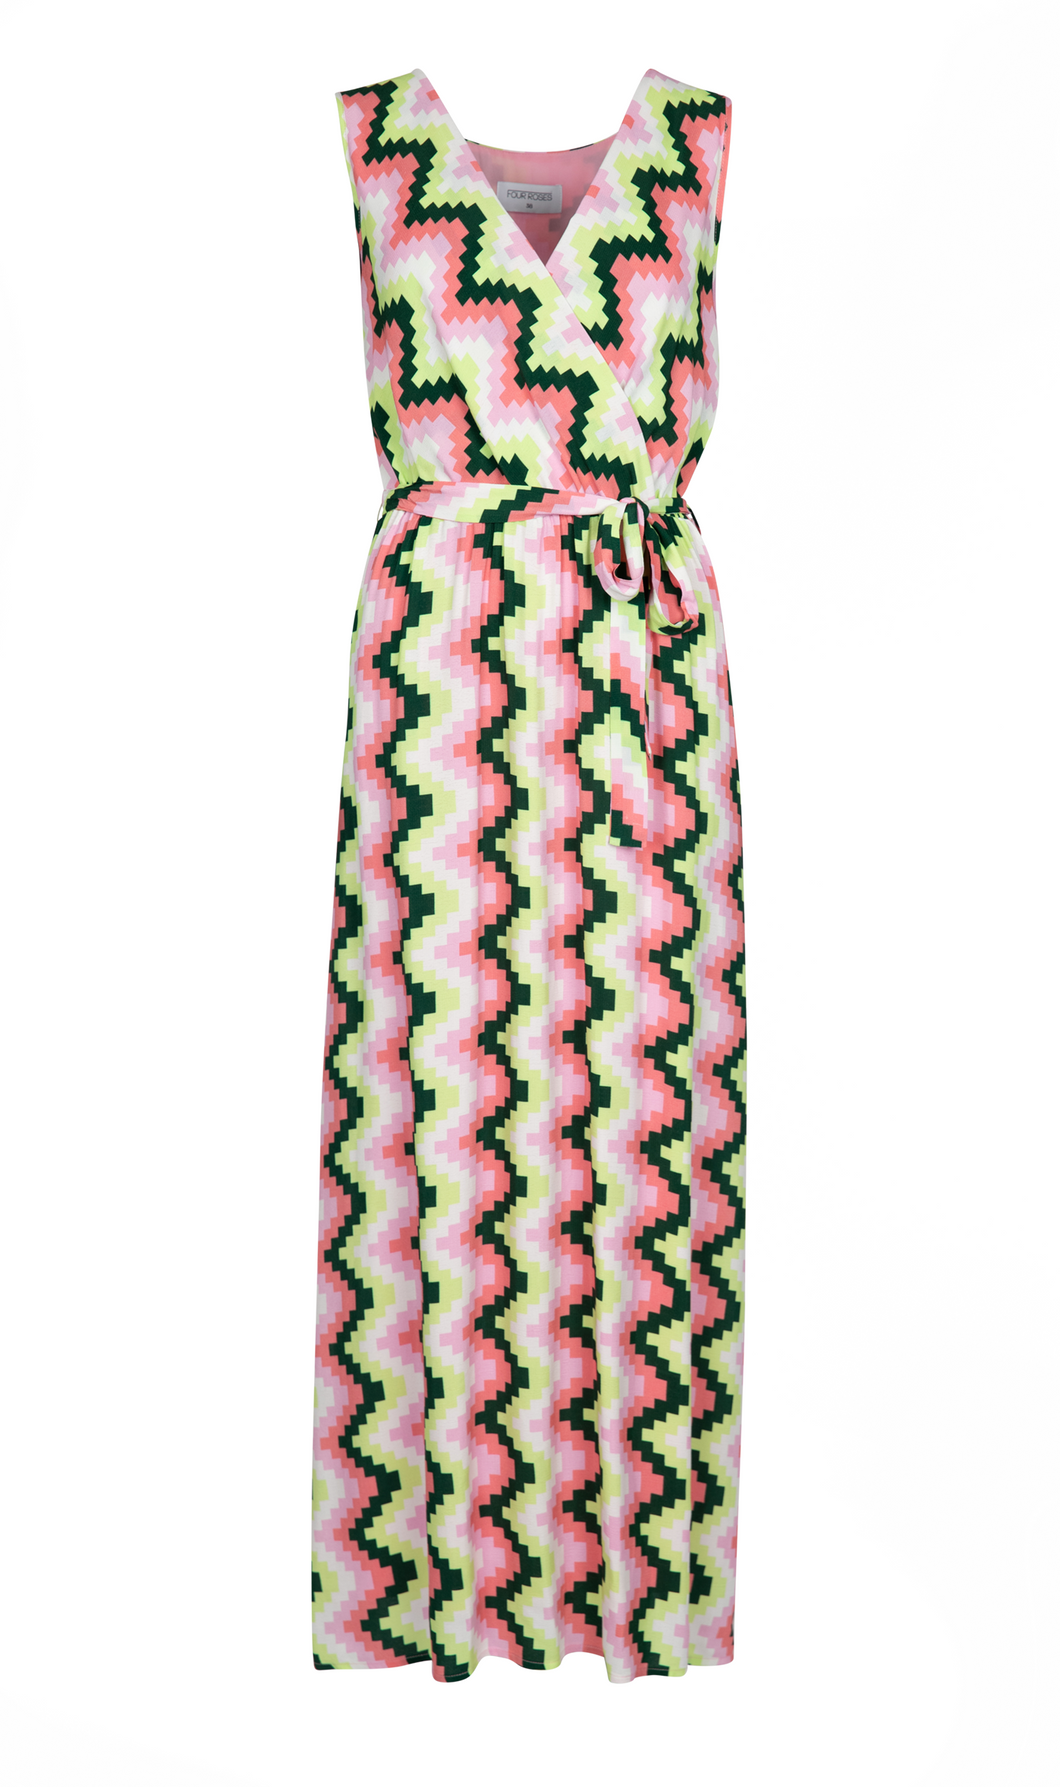 Zomerse jurk met geometrische print (6129)